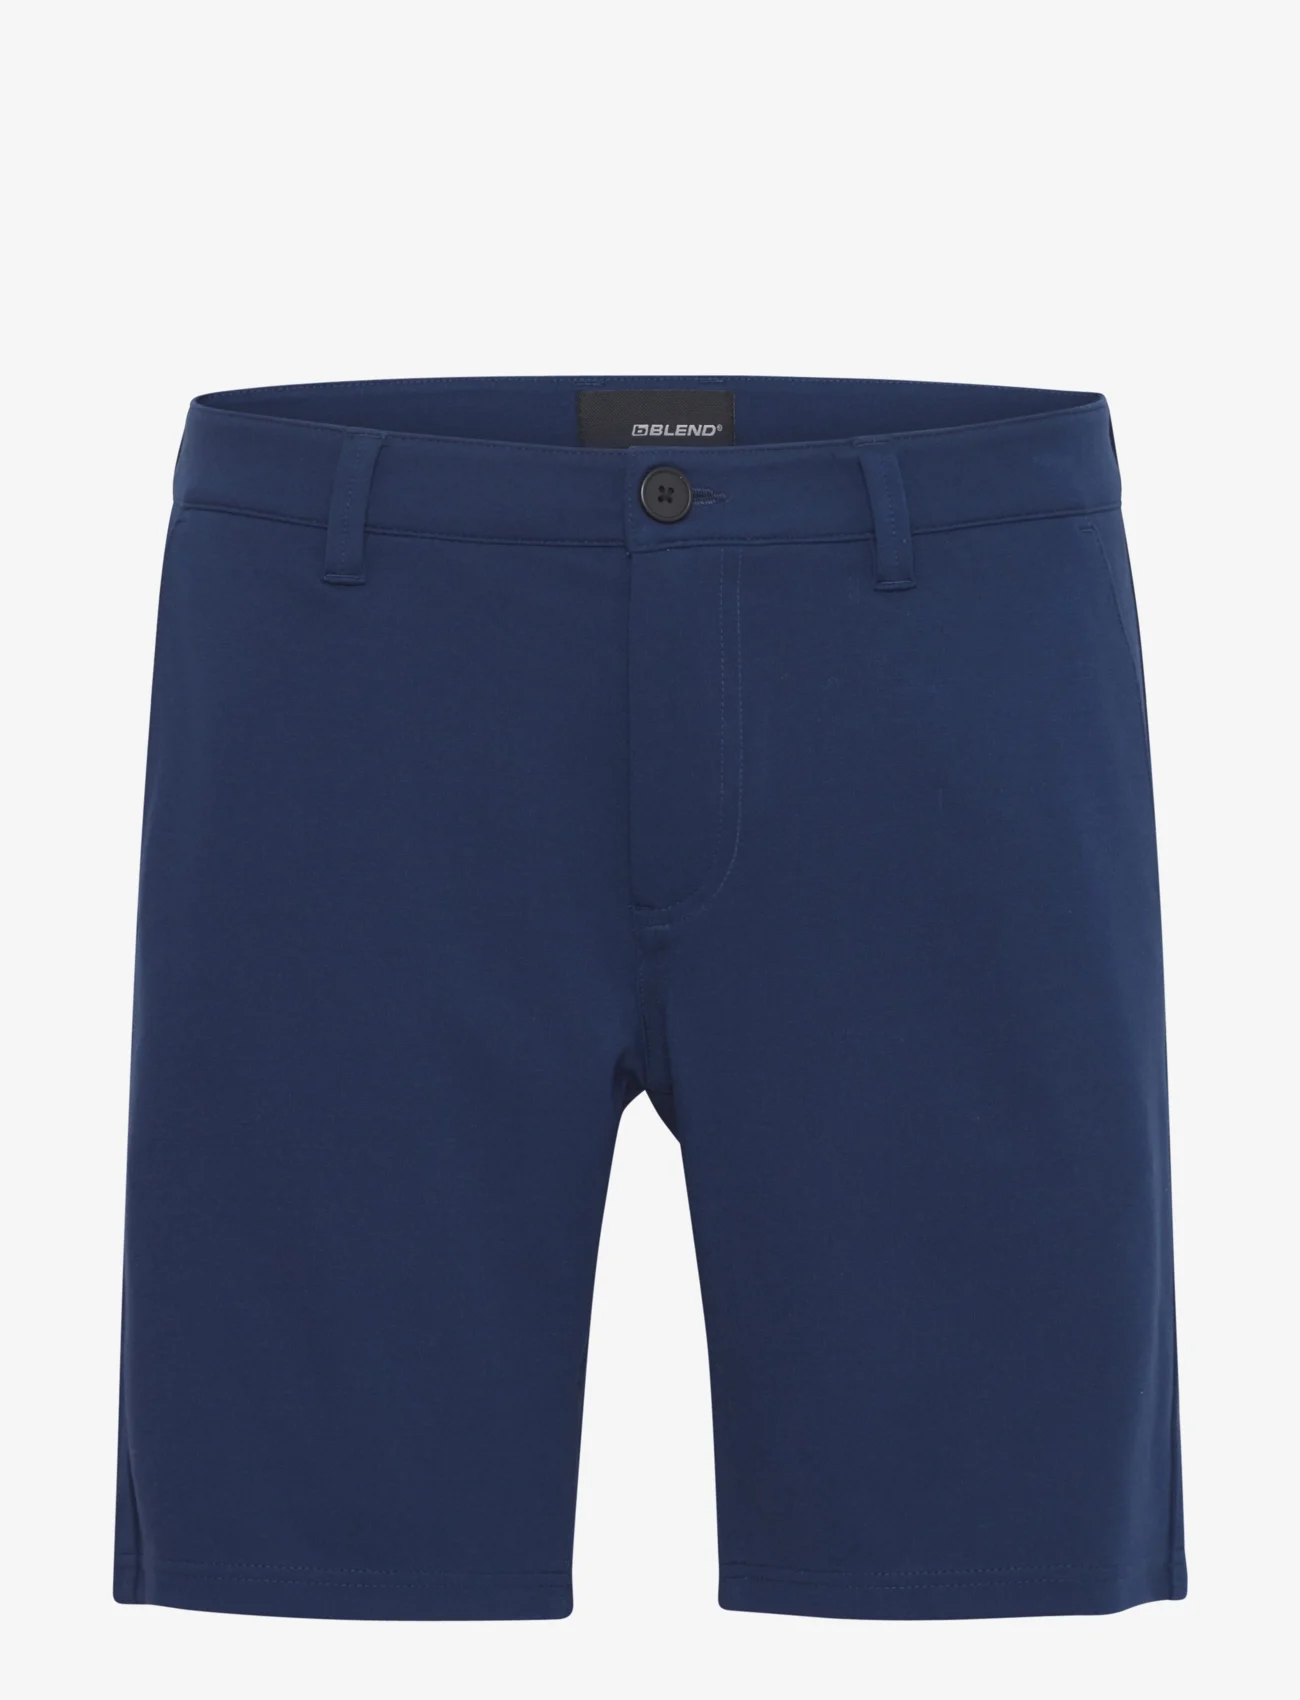 Blend - Shorts - short chino - medieval blue - 0